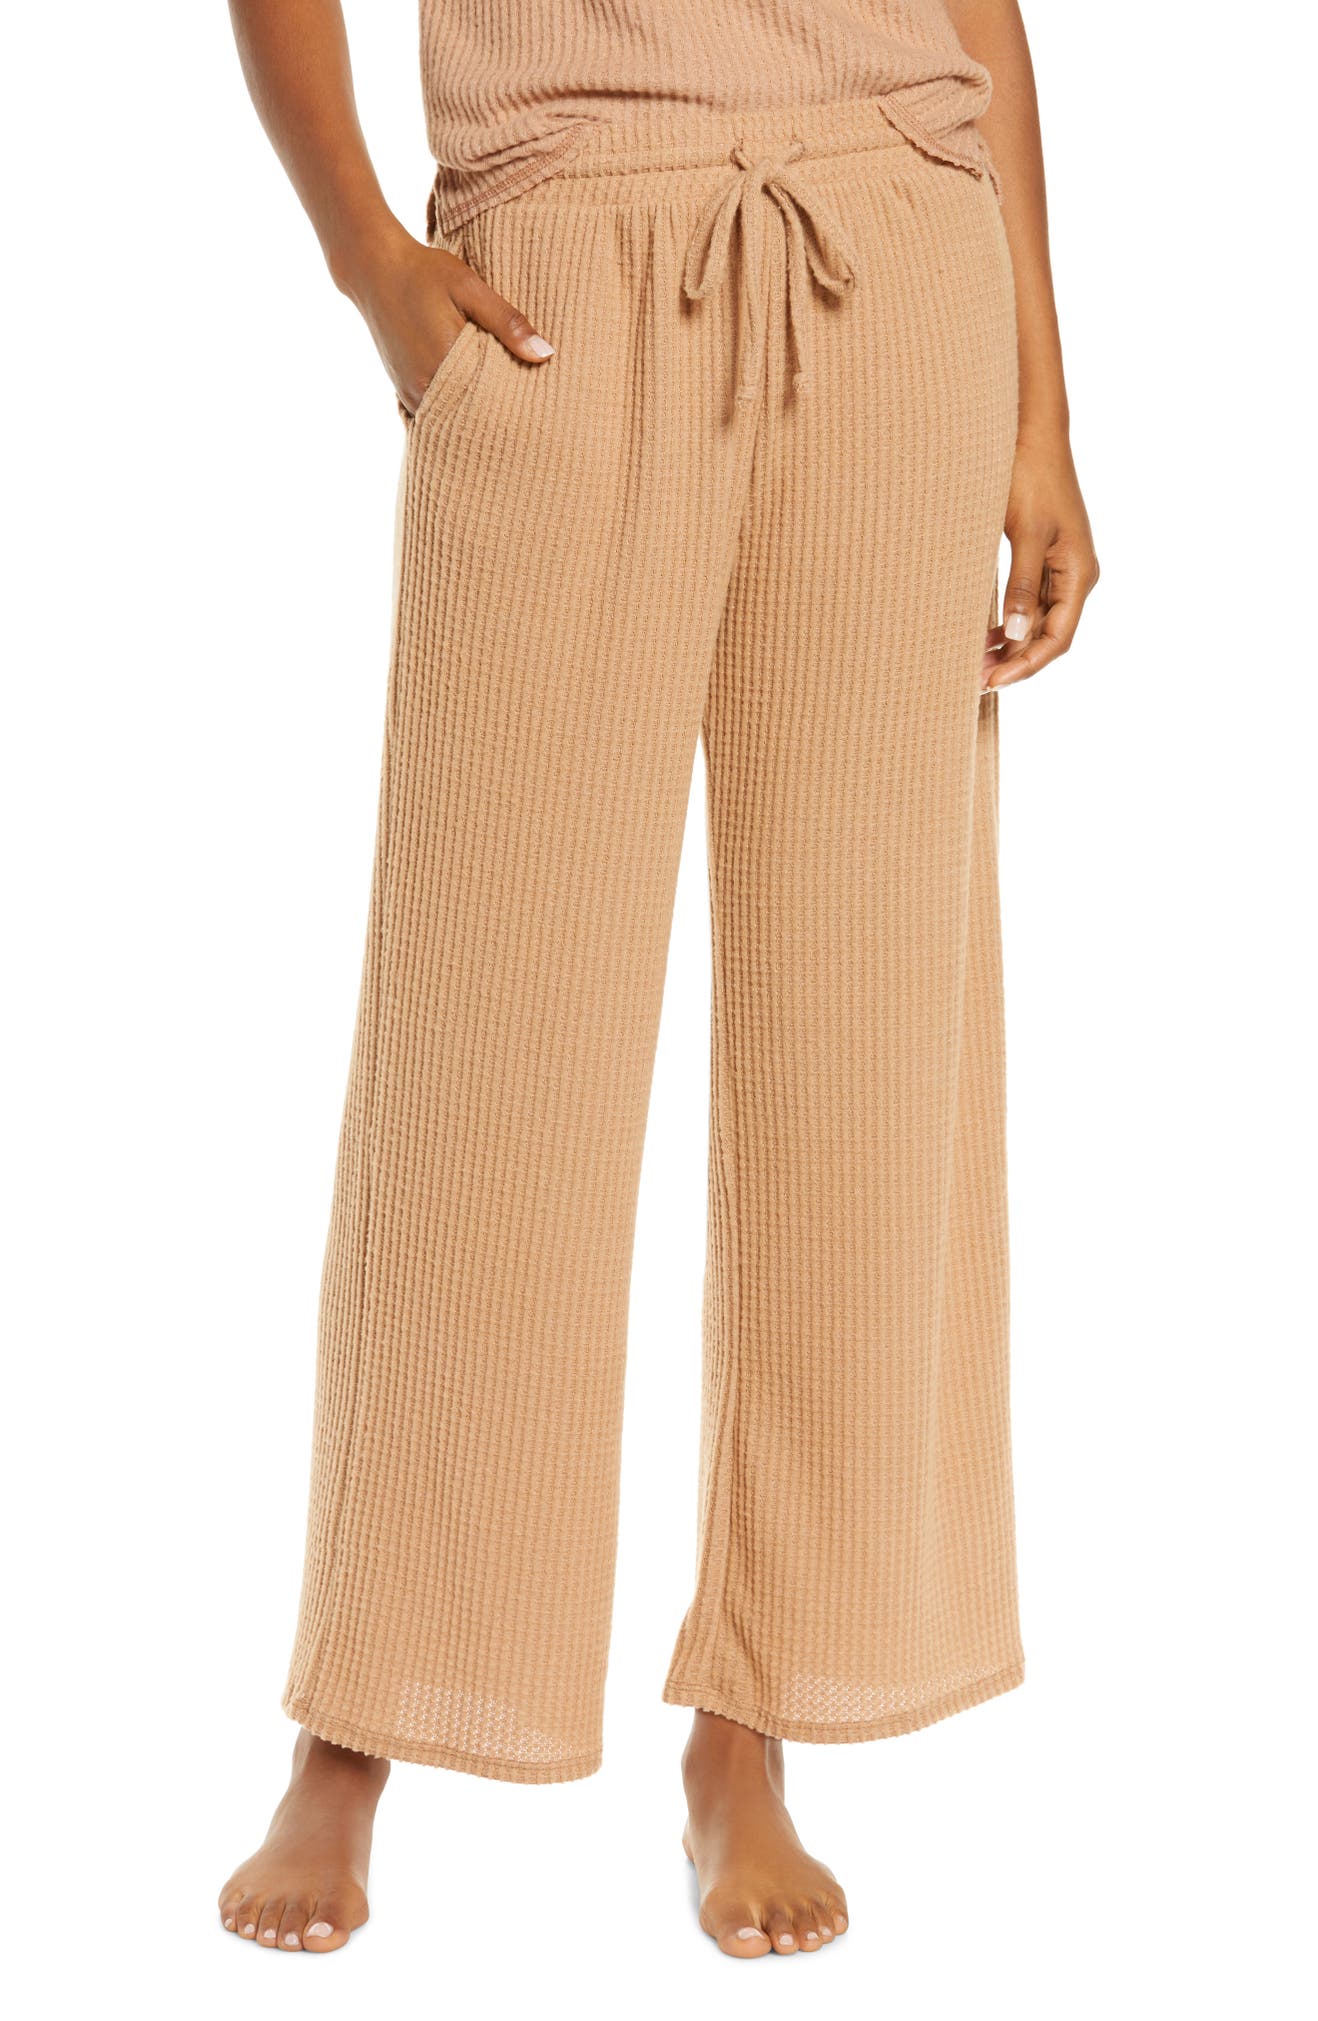 SOCIALITE Waffle Knit Wide Leg Pants, Main, color, CAMEL